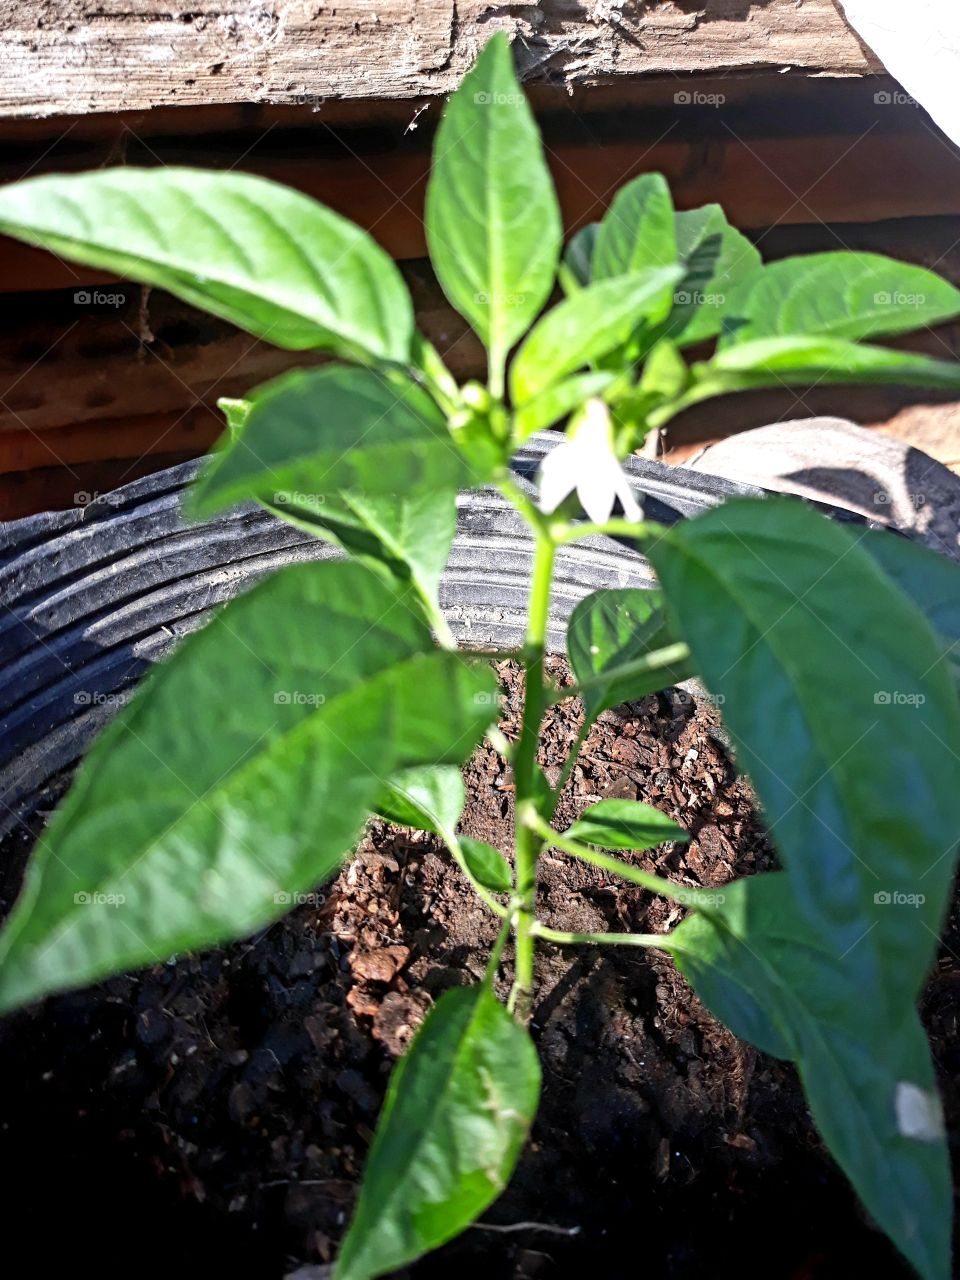 Ornamental pepper plant